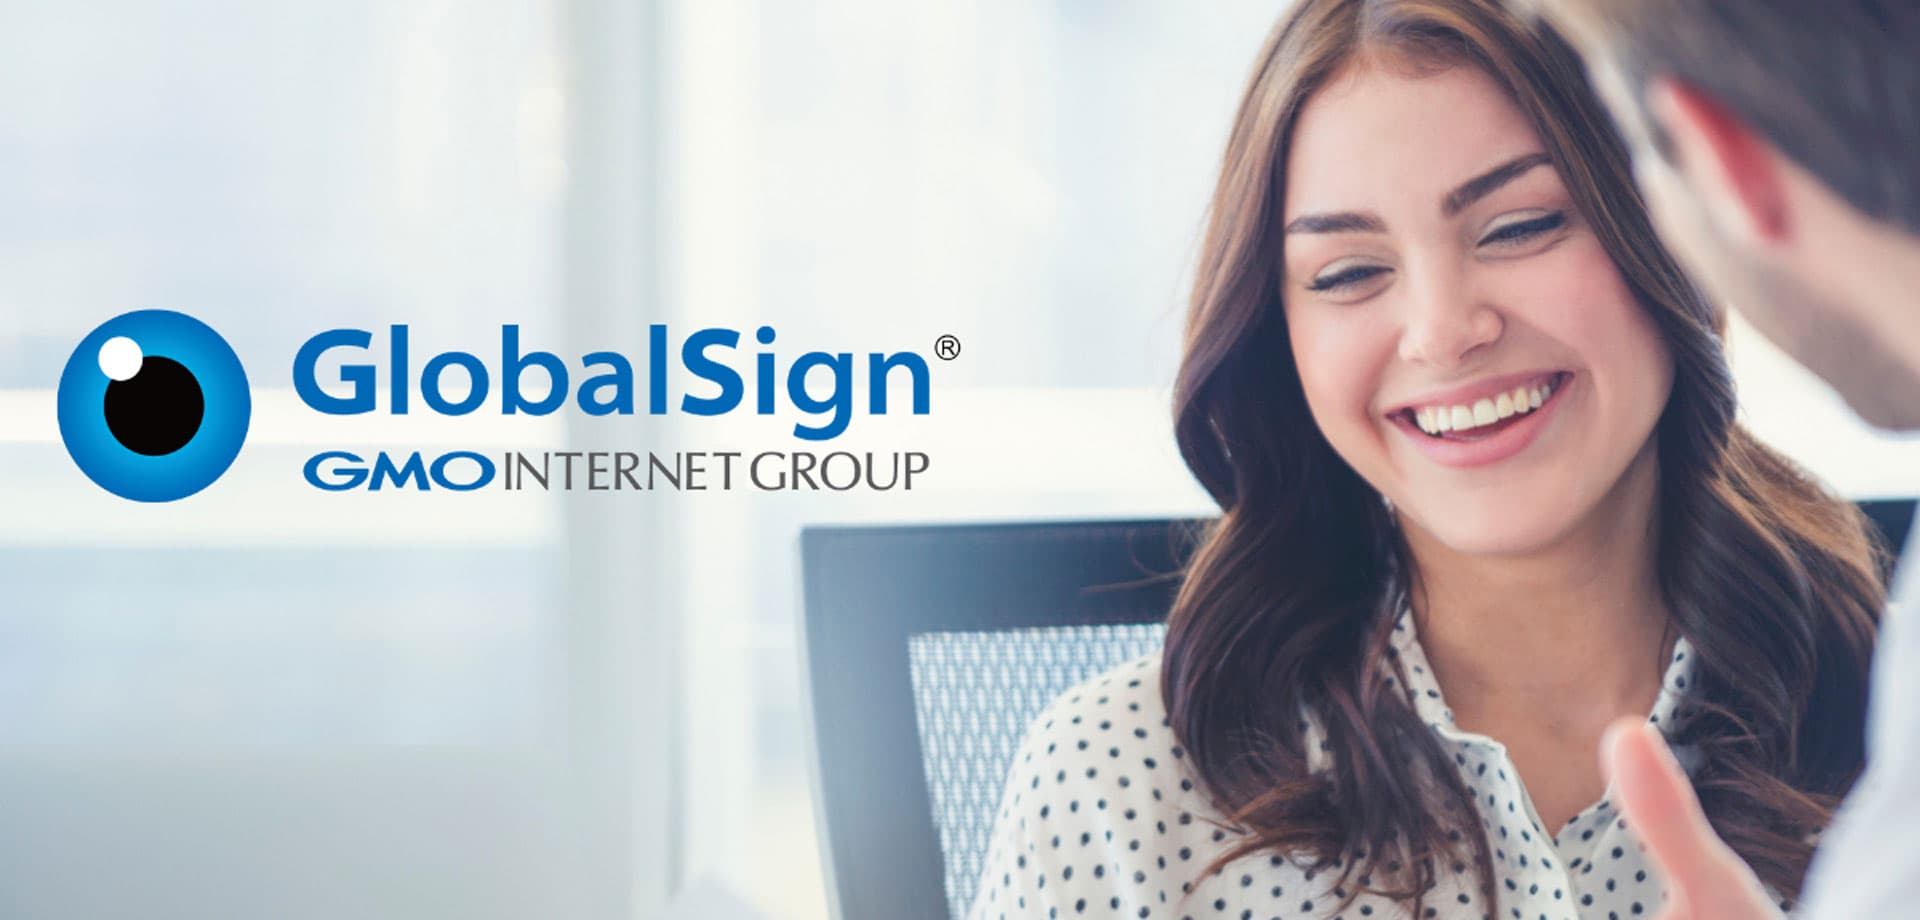 GlobalSign 在網路世界建構更強大的信任機制